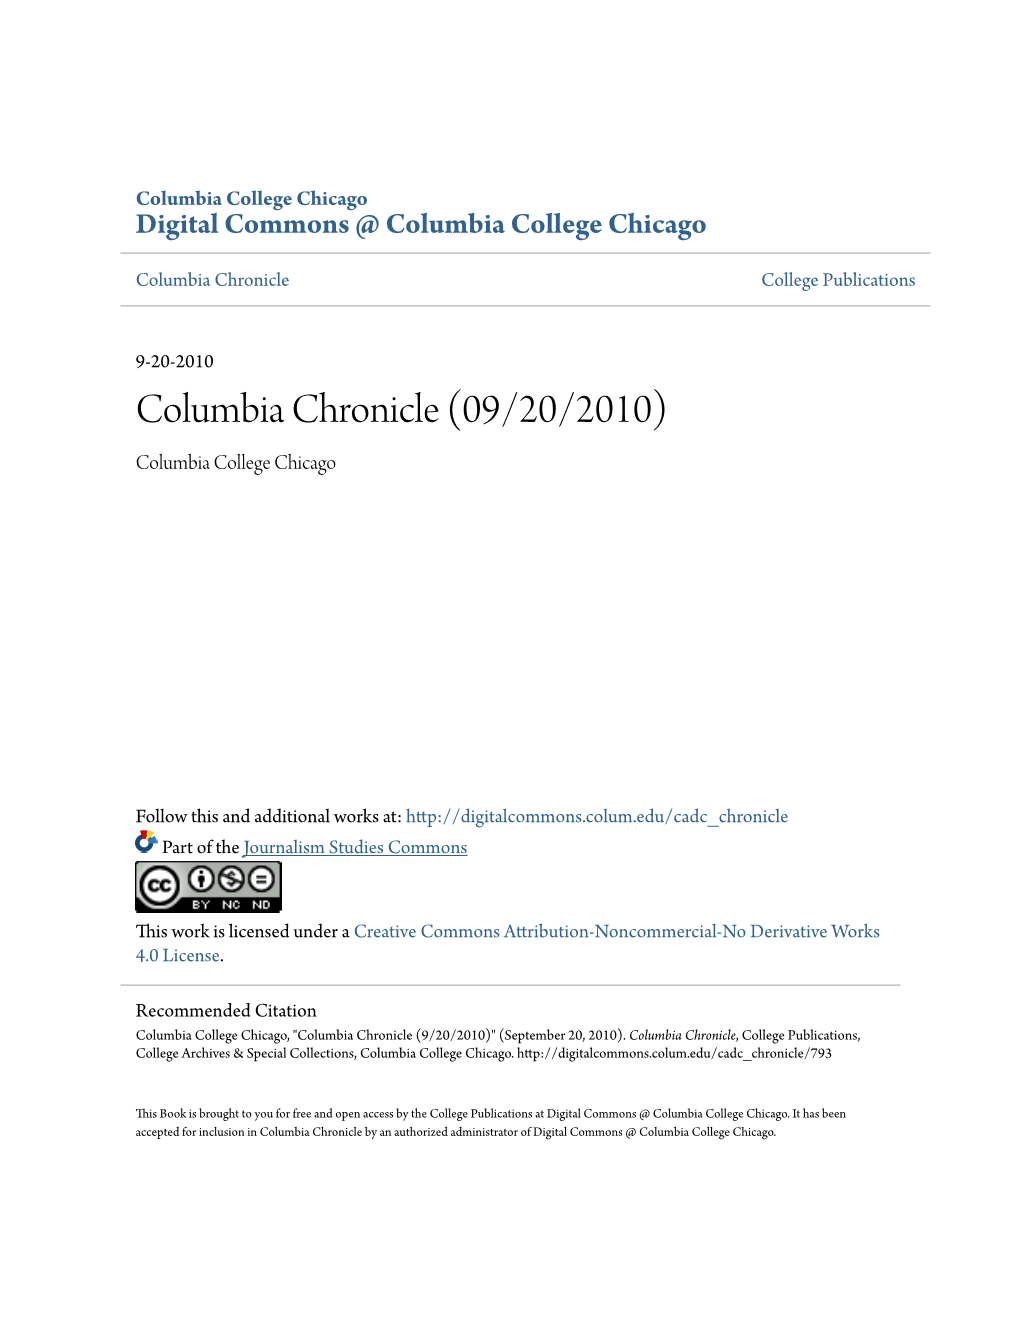 Columbia Chronicle (09/20/2010) Columbia College Chicago